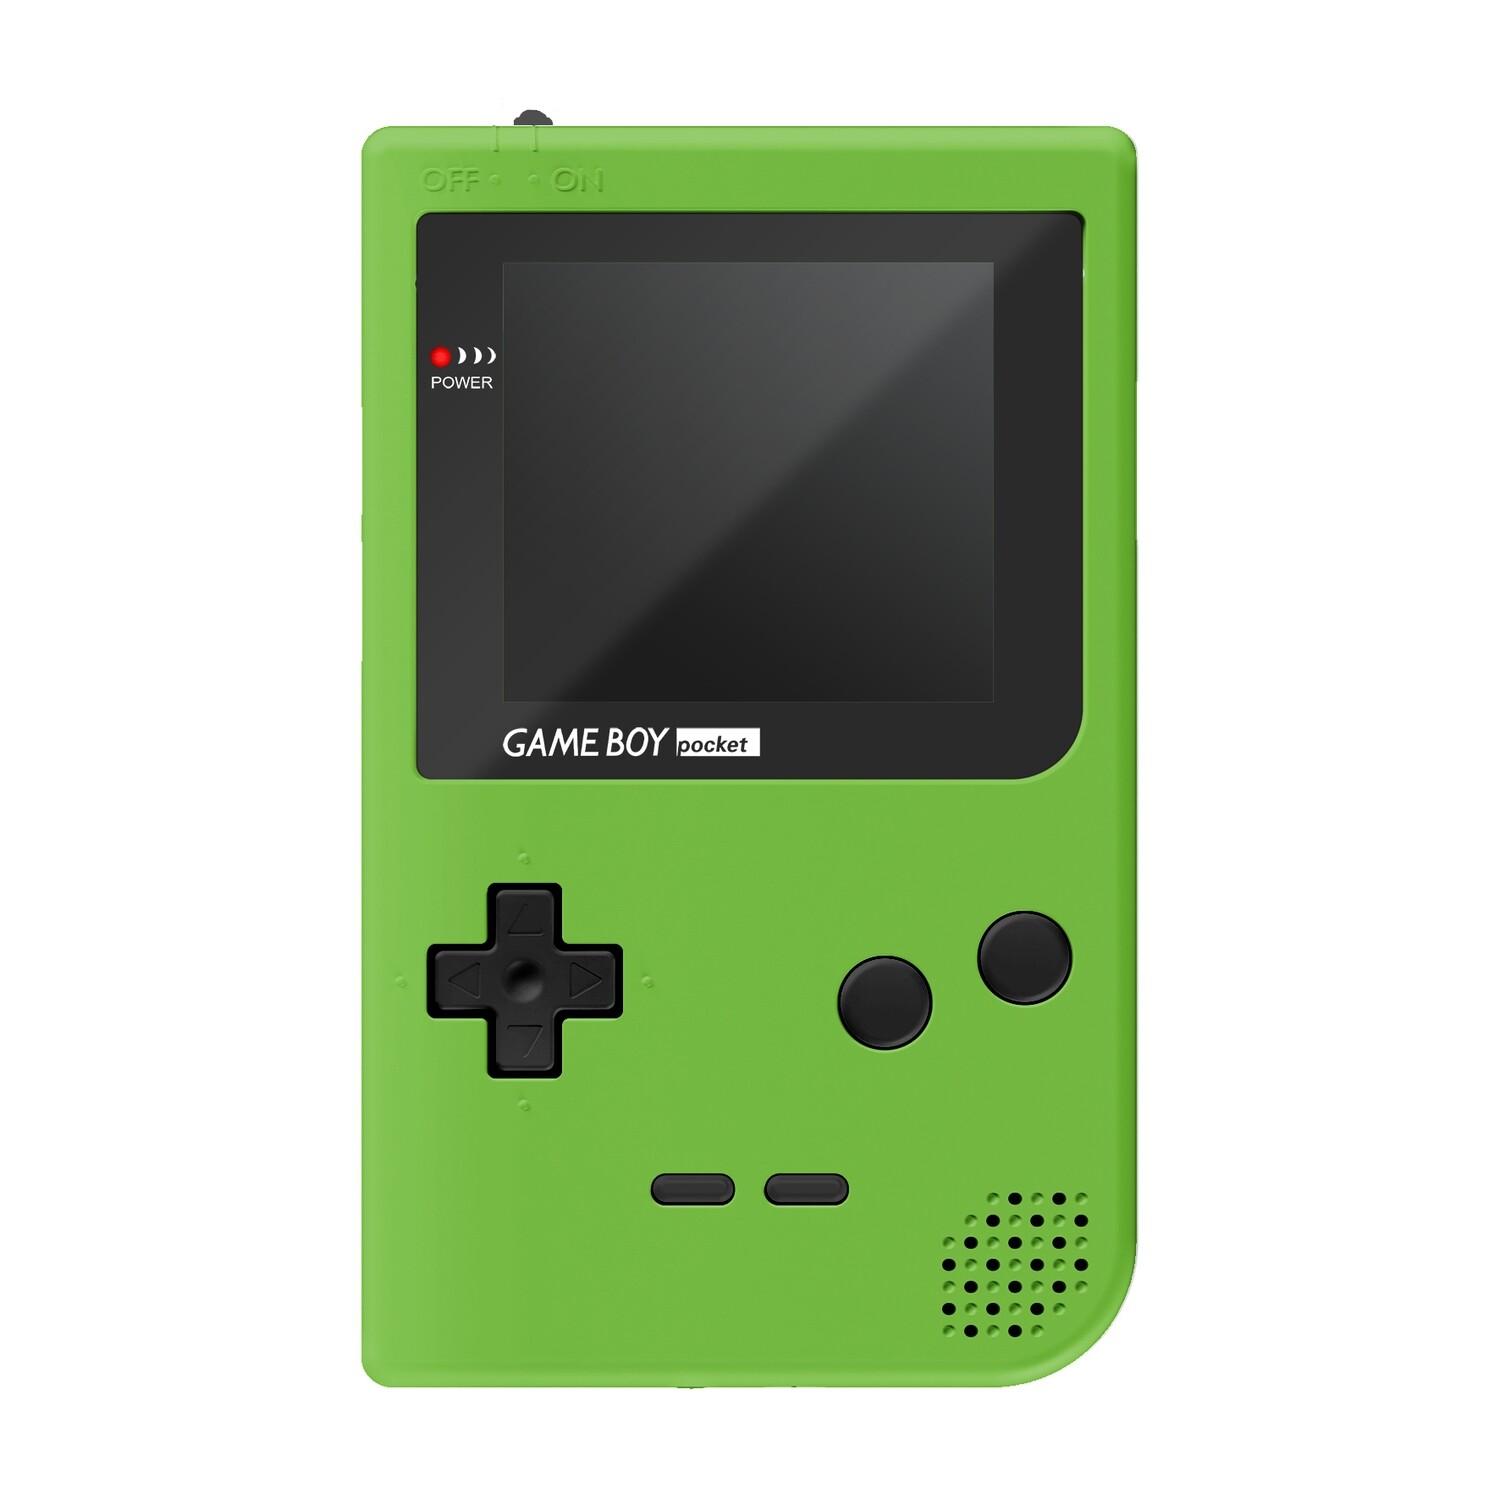 Game Boy Pocket Console: Prestige Edition (Solid Green)